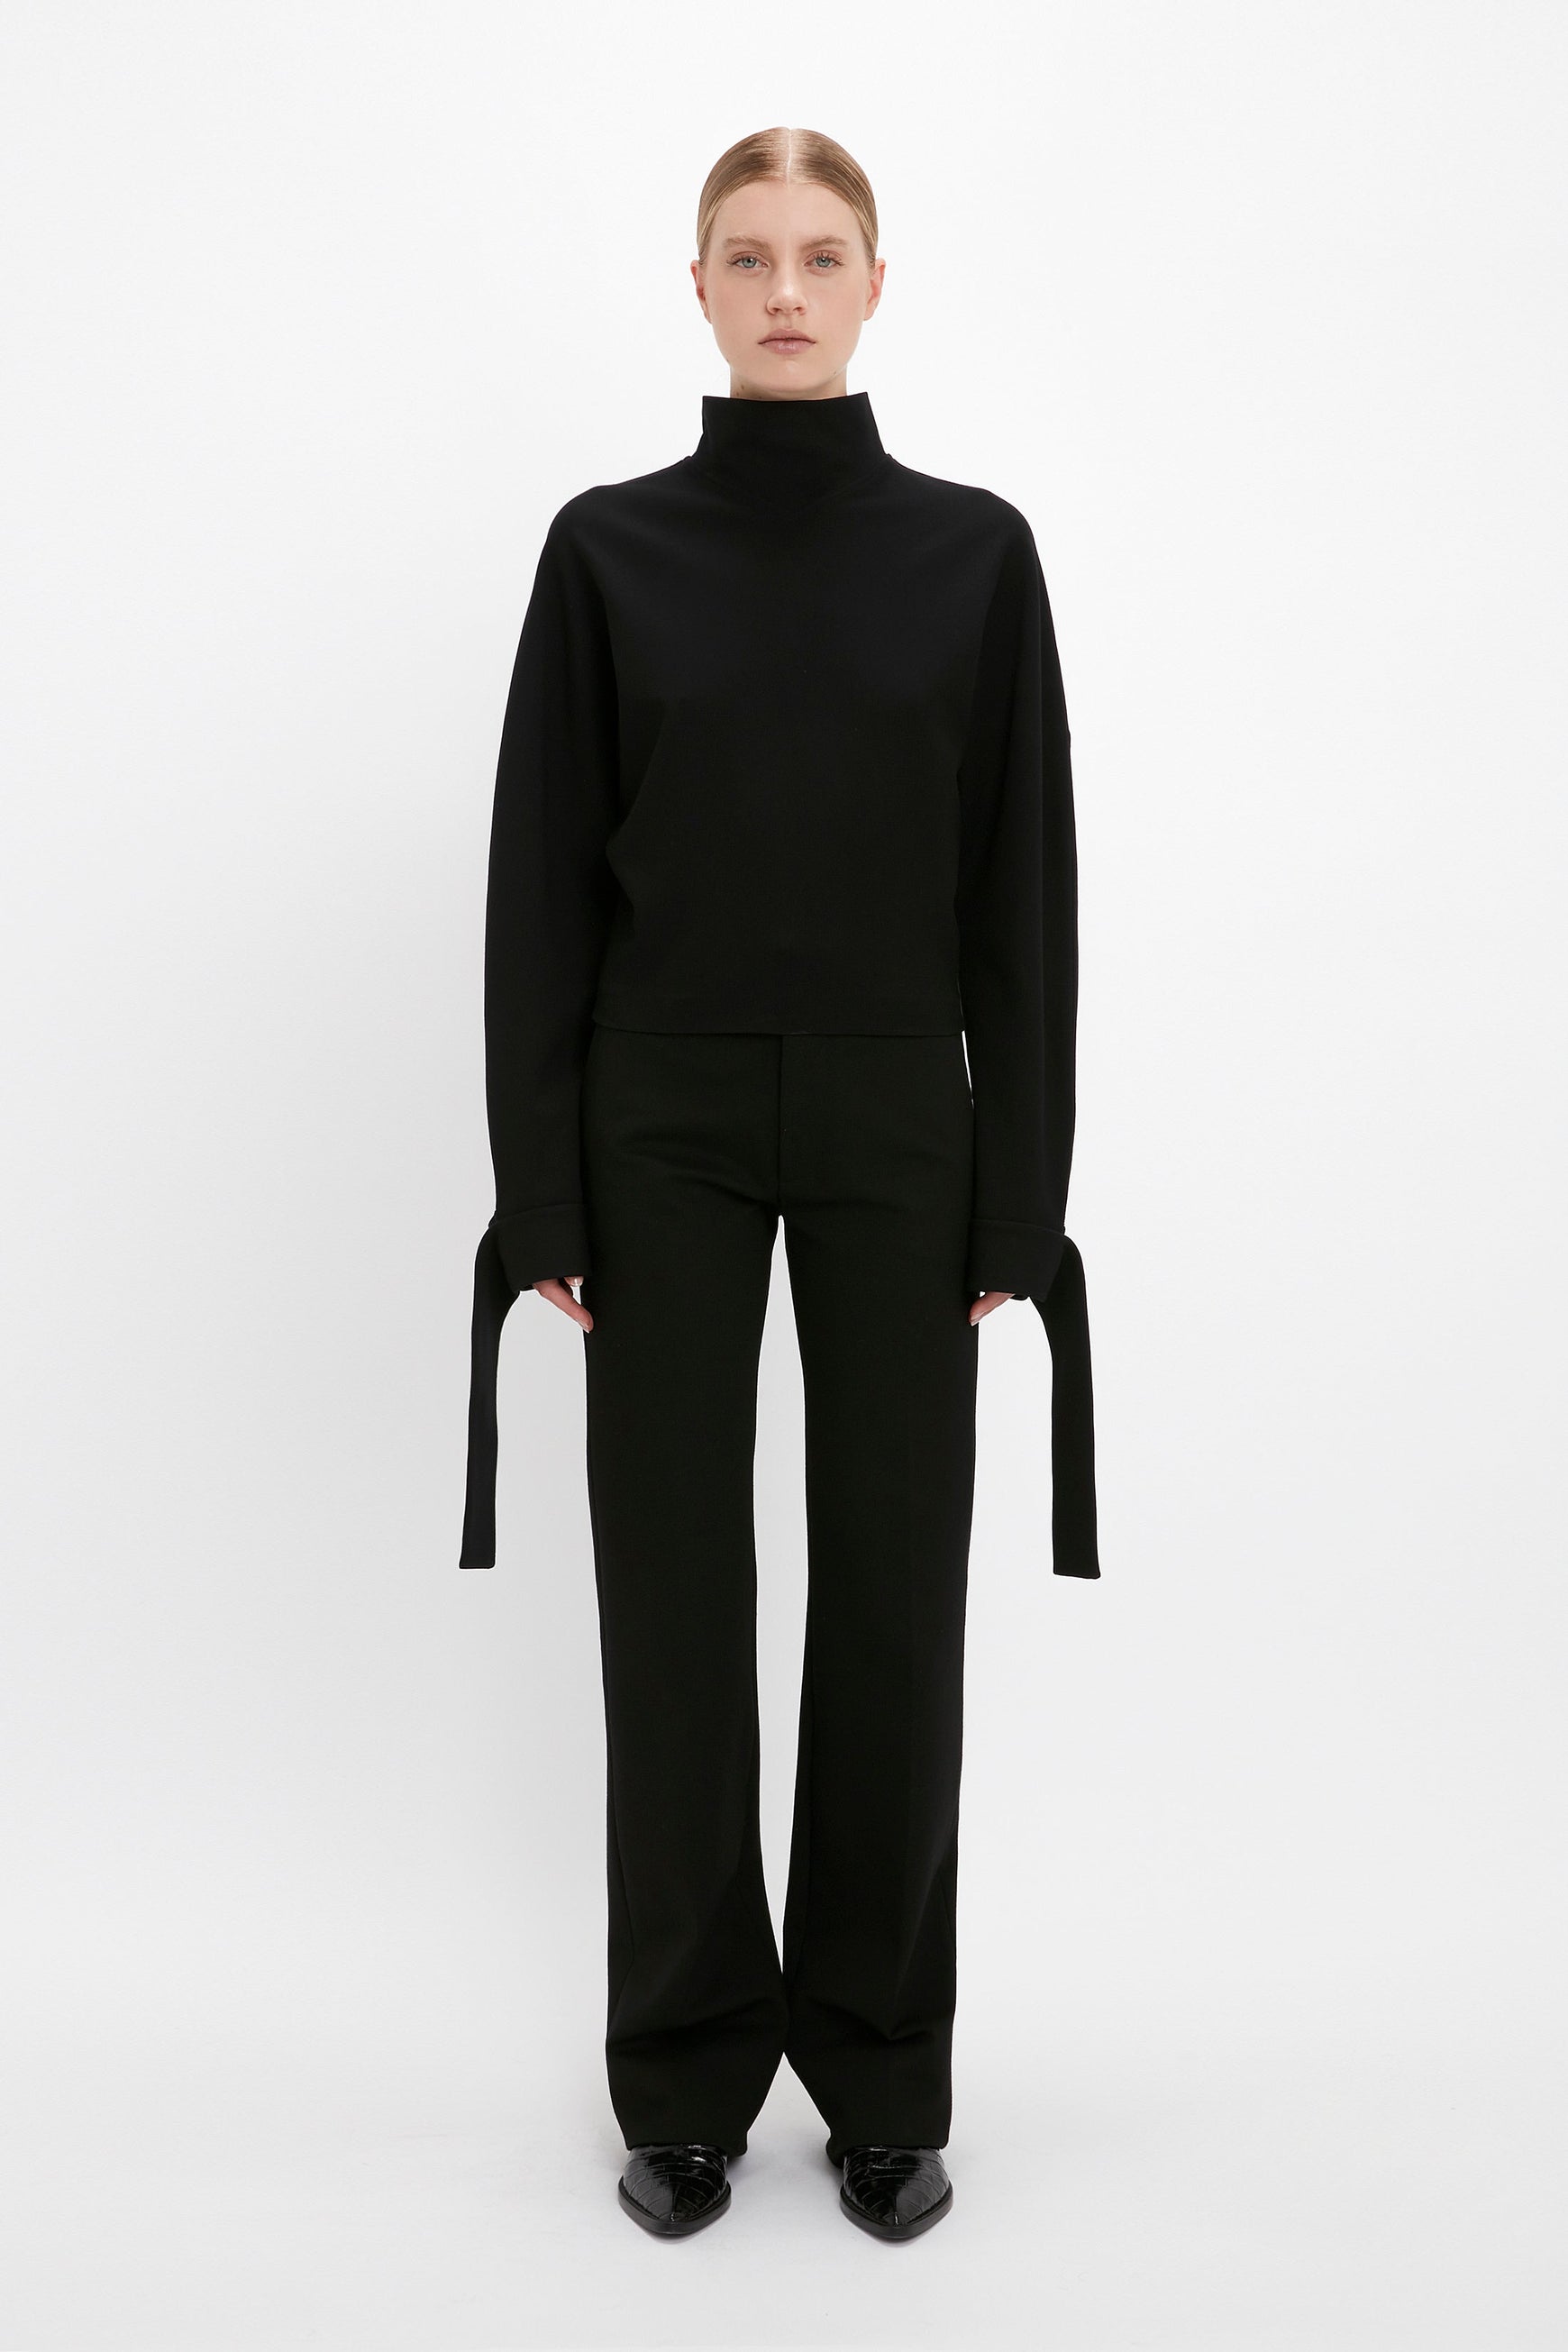 Tie Sleeve Ponti Top In Black – Victoria Beckham